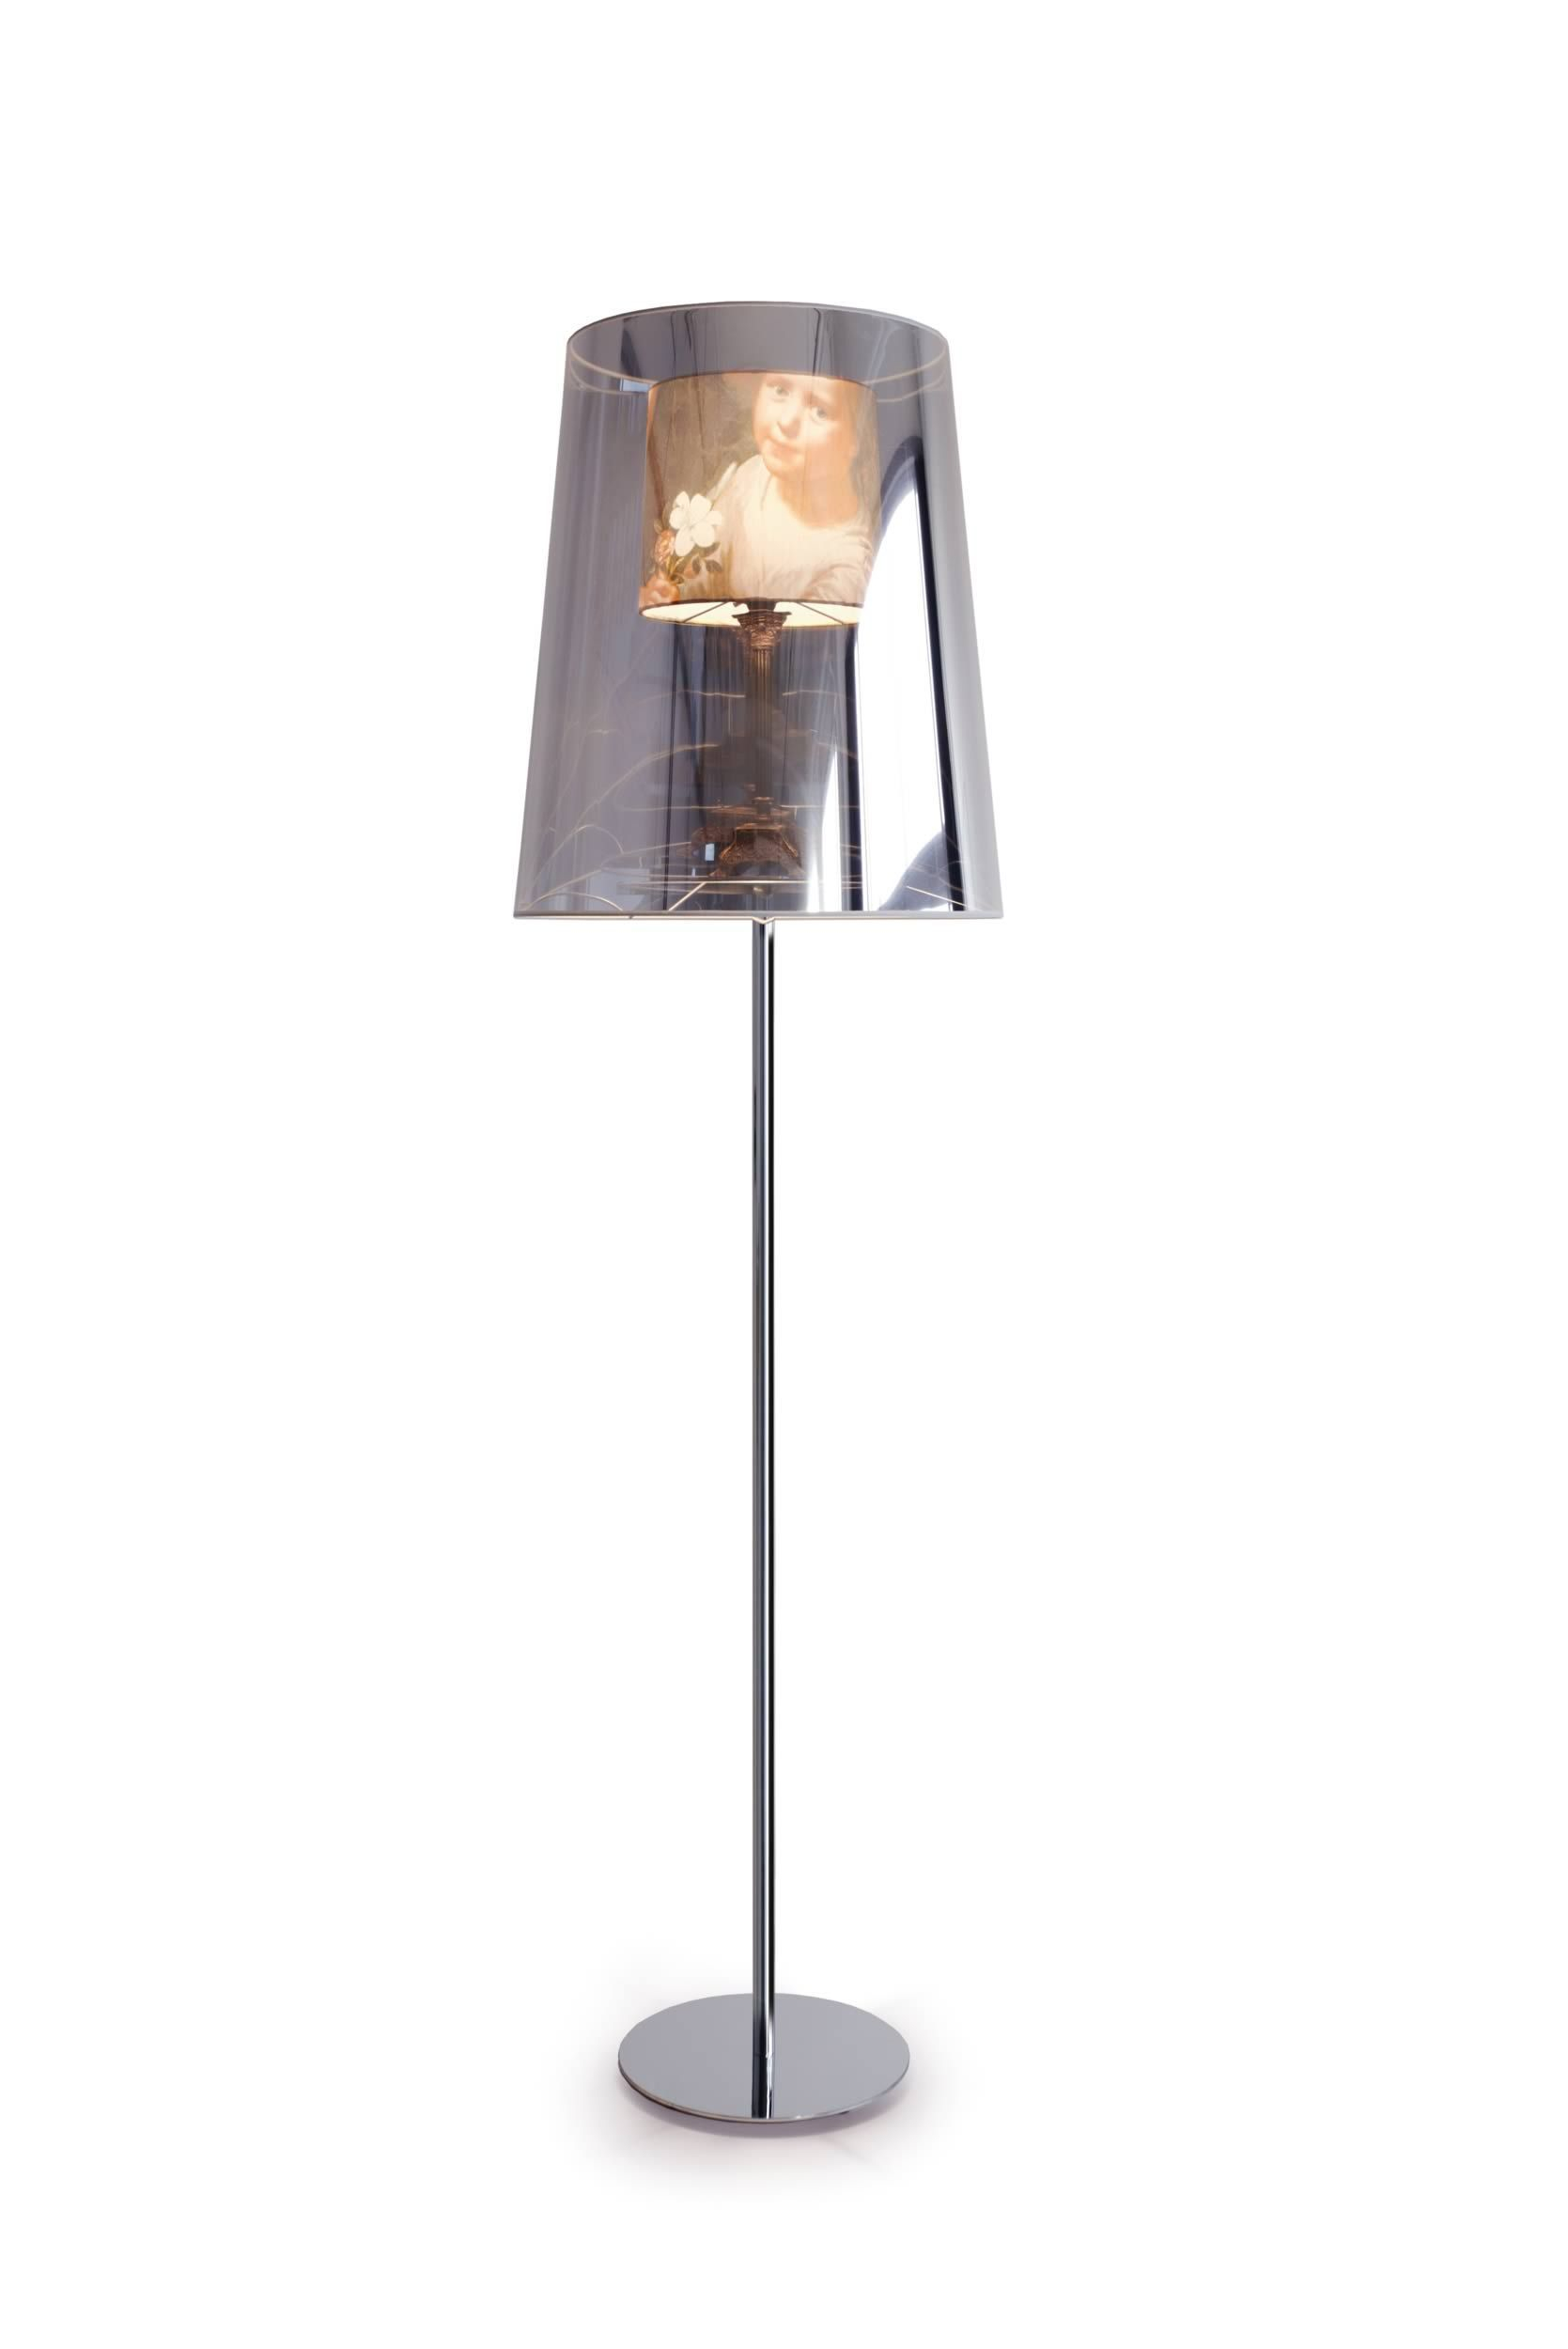 Unique Oversized Floor Lamp Design Oversized Floor Lamp inside size 1669 X 2500